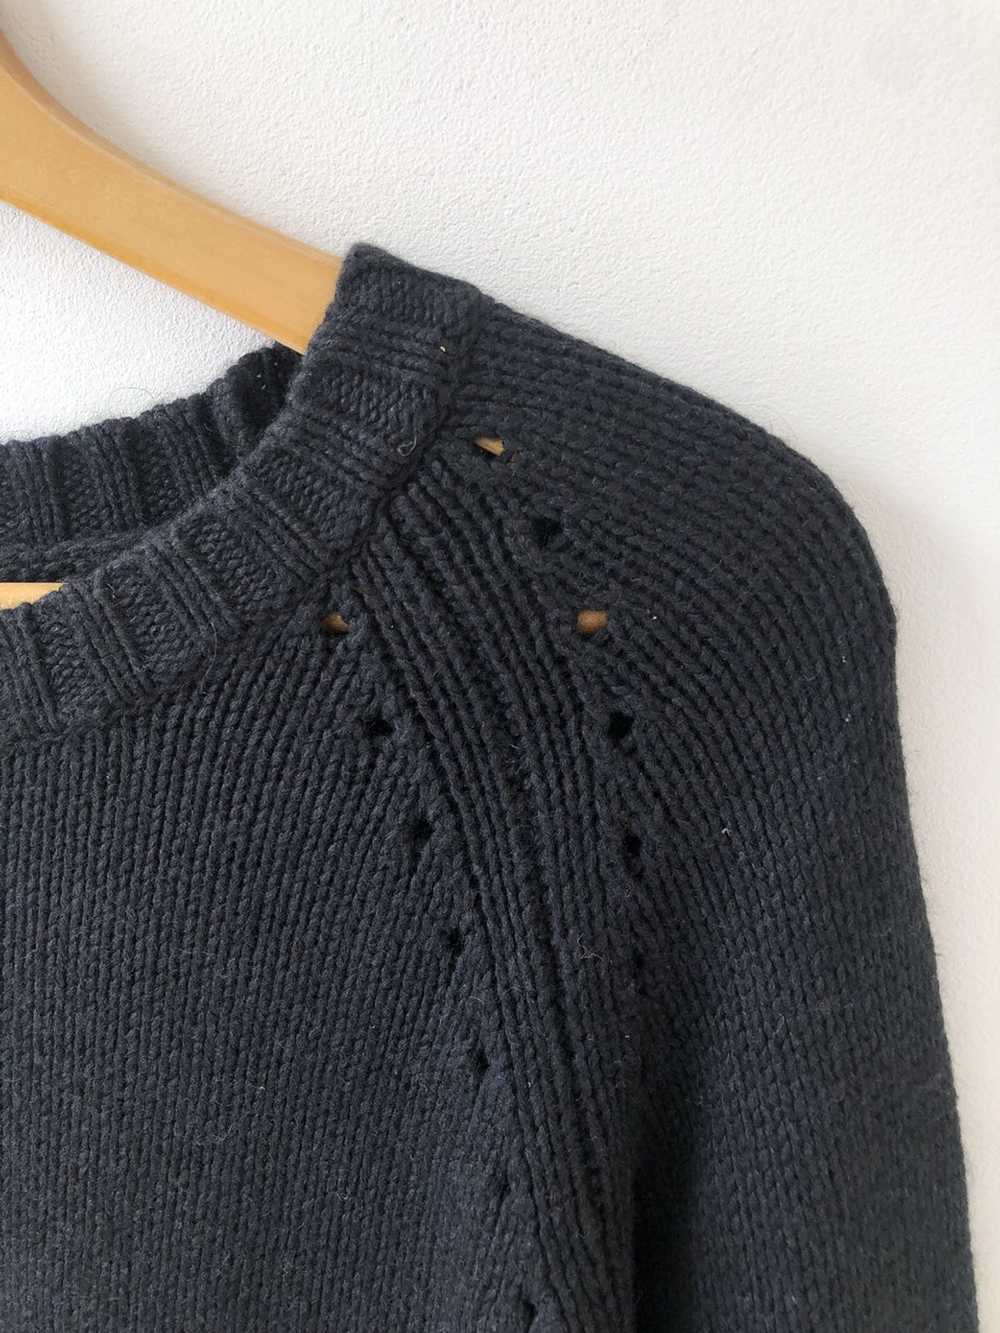 Marimekko Marimekko wool angora blend knit sweater - image 5